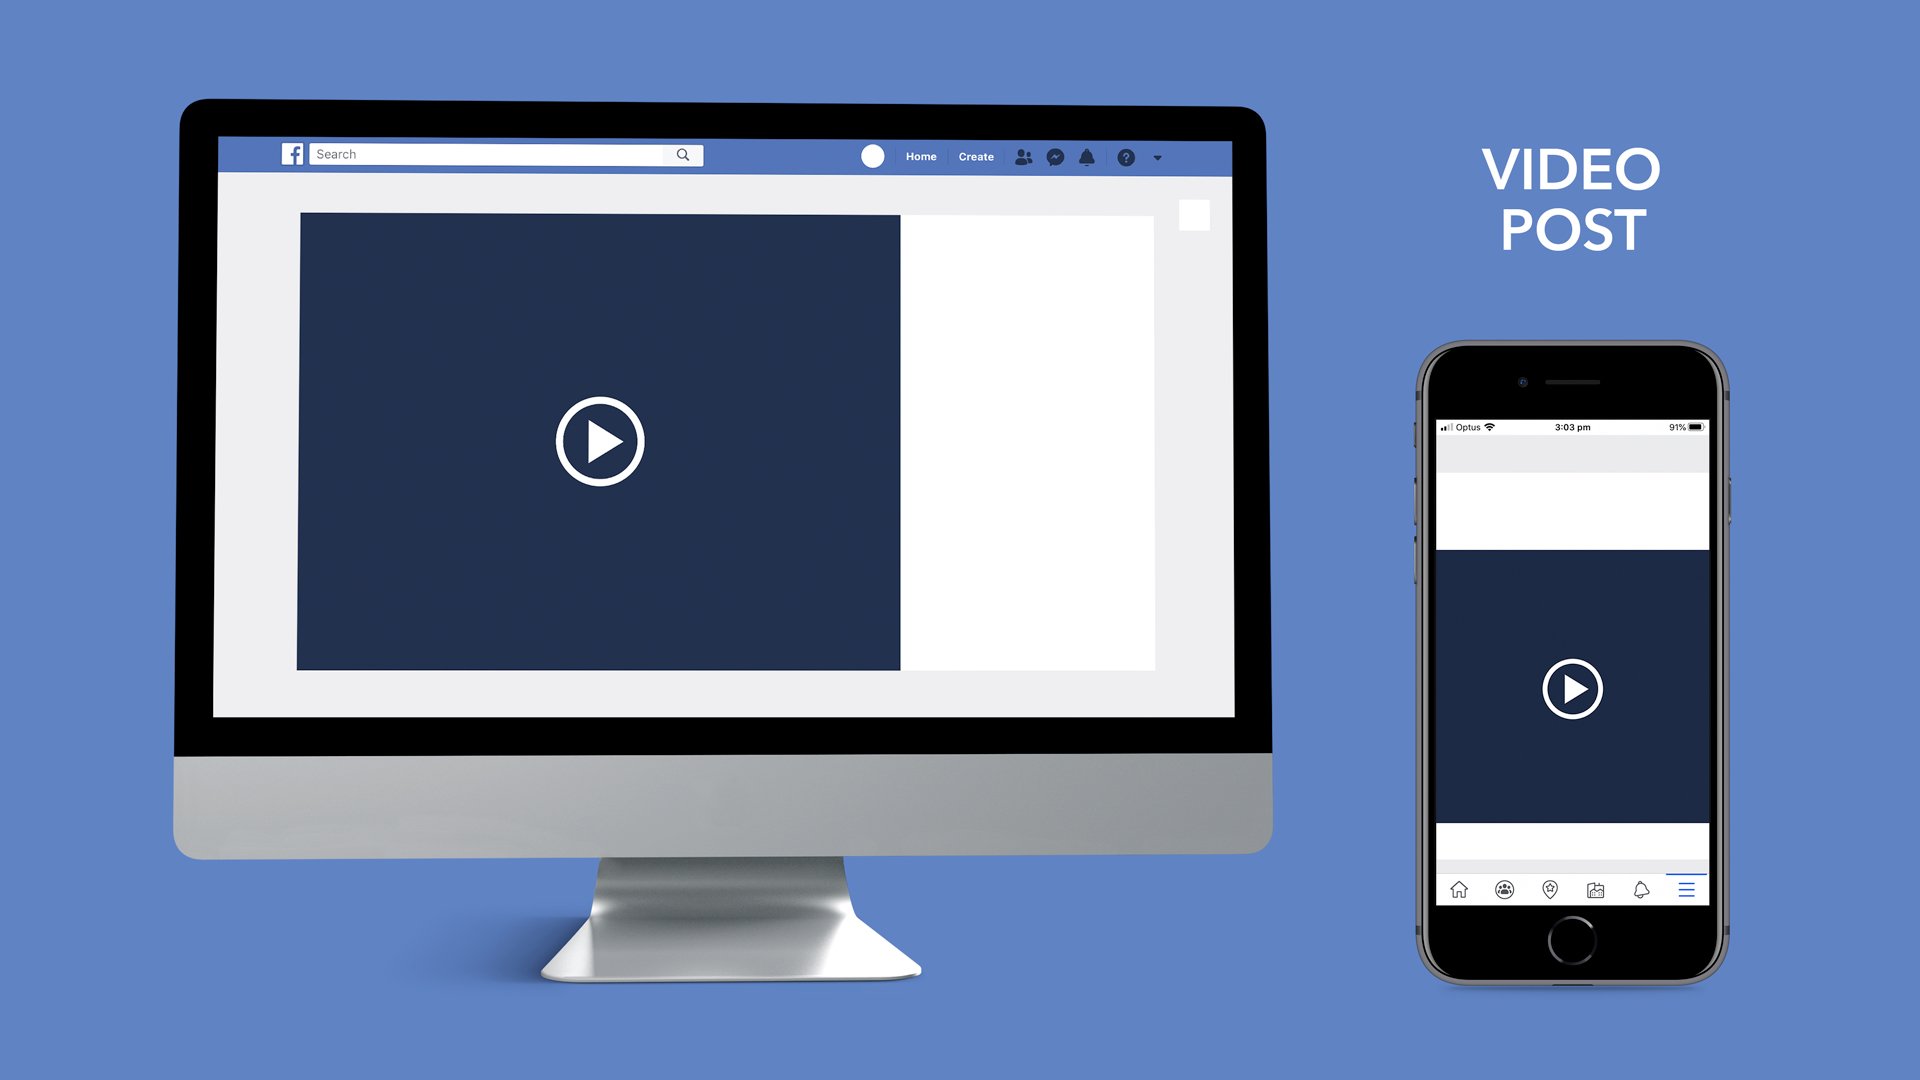 Facebook best practice video guidelines for desktop and mobile